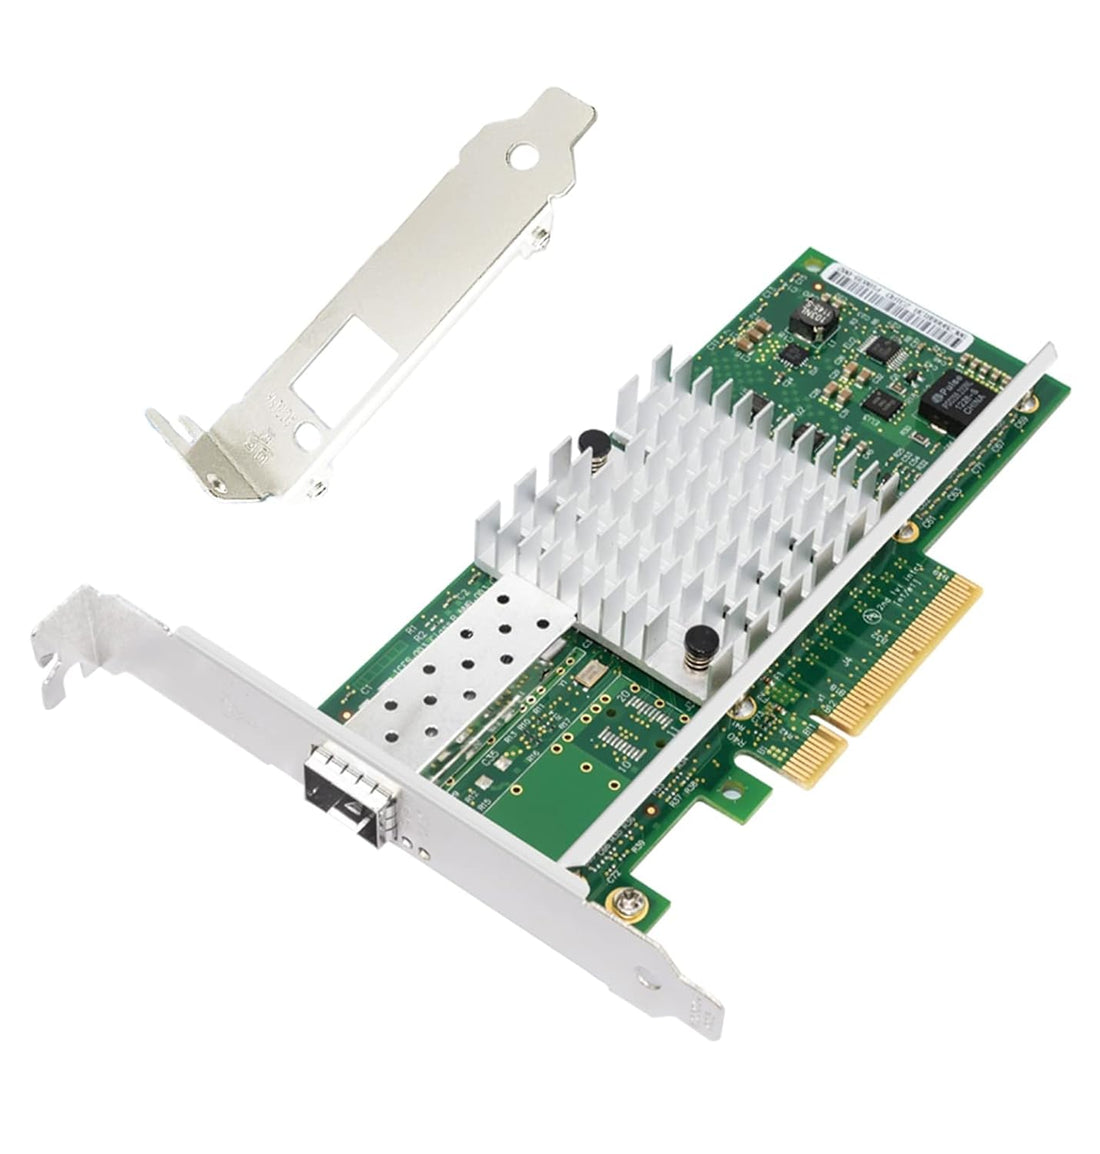 10Gb Network Card Single SFP+ Port PCI Express x8 Ethernet Converged Server Adapter Compatible Intel X520-DA1 82599EN Chip Support Windows 7/8/10/11/Visa,Server/Linux/VMware